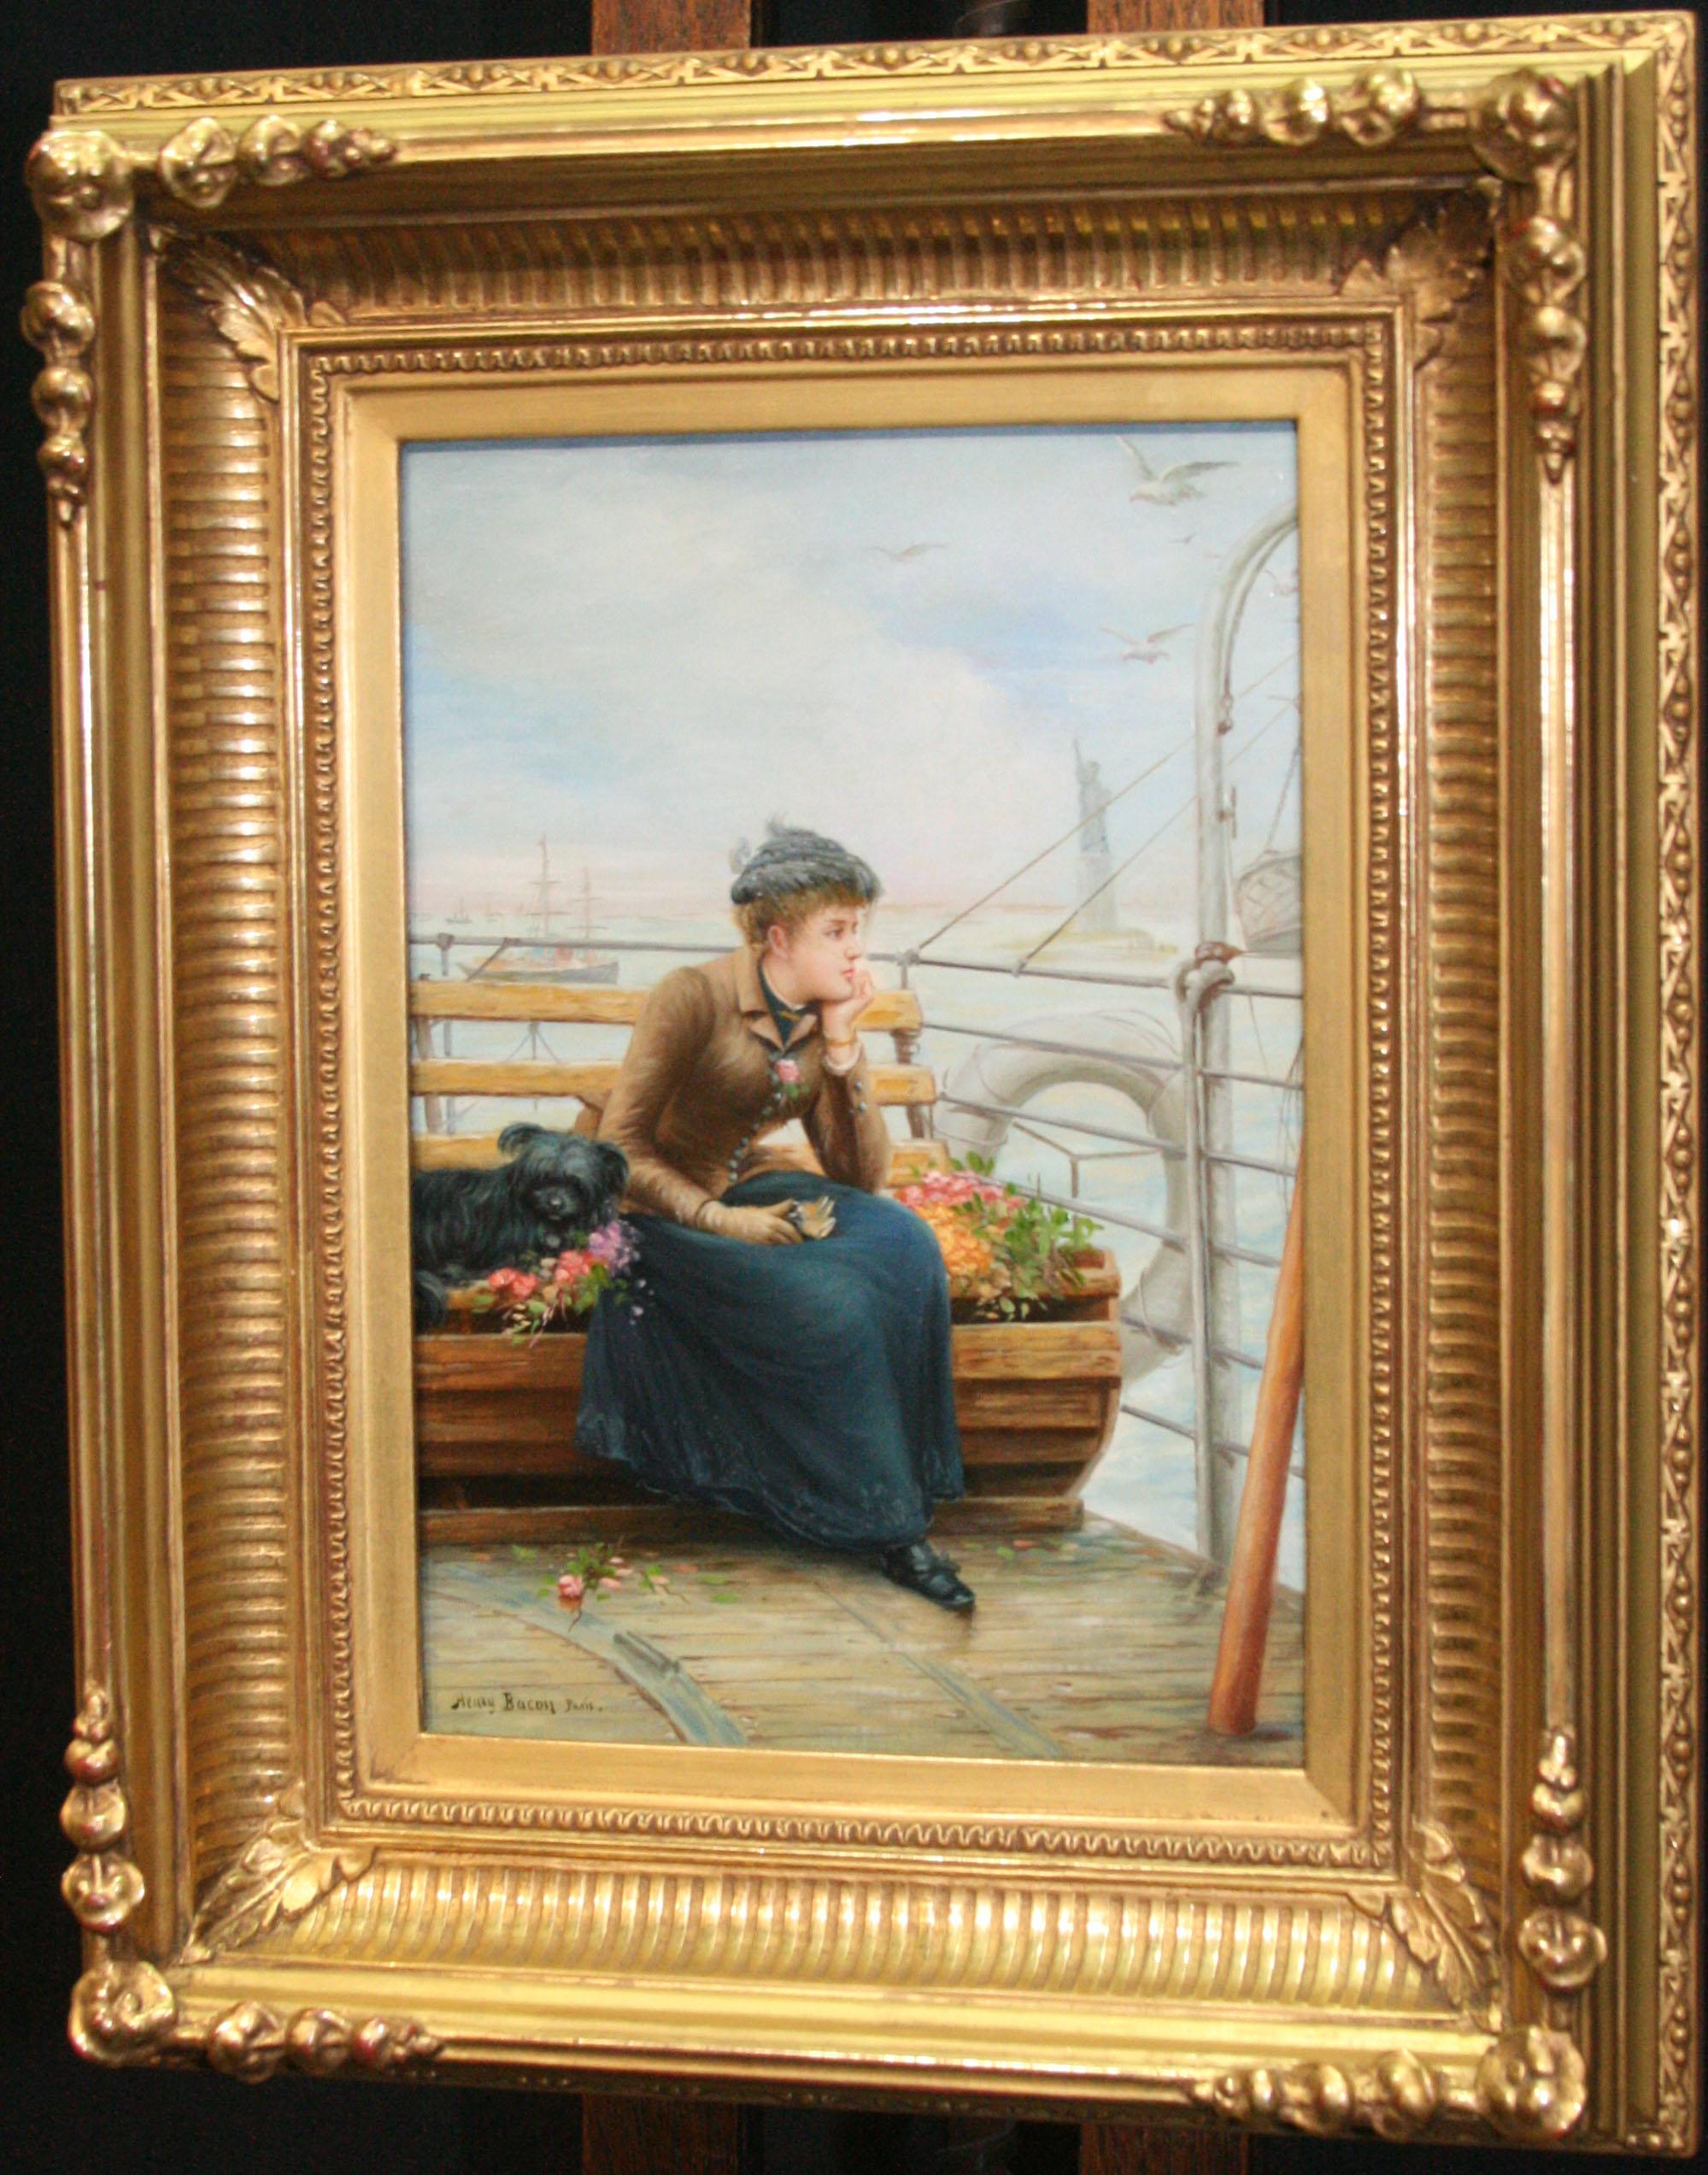 Dreaming Anew, aus dem New Yorker Hafen (Grau), Portrait Painting, von Henry Bacon